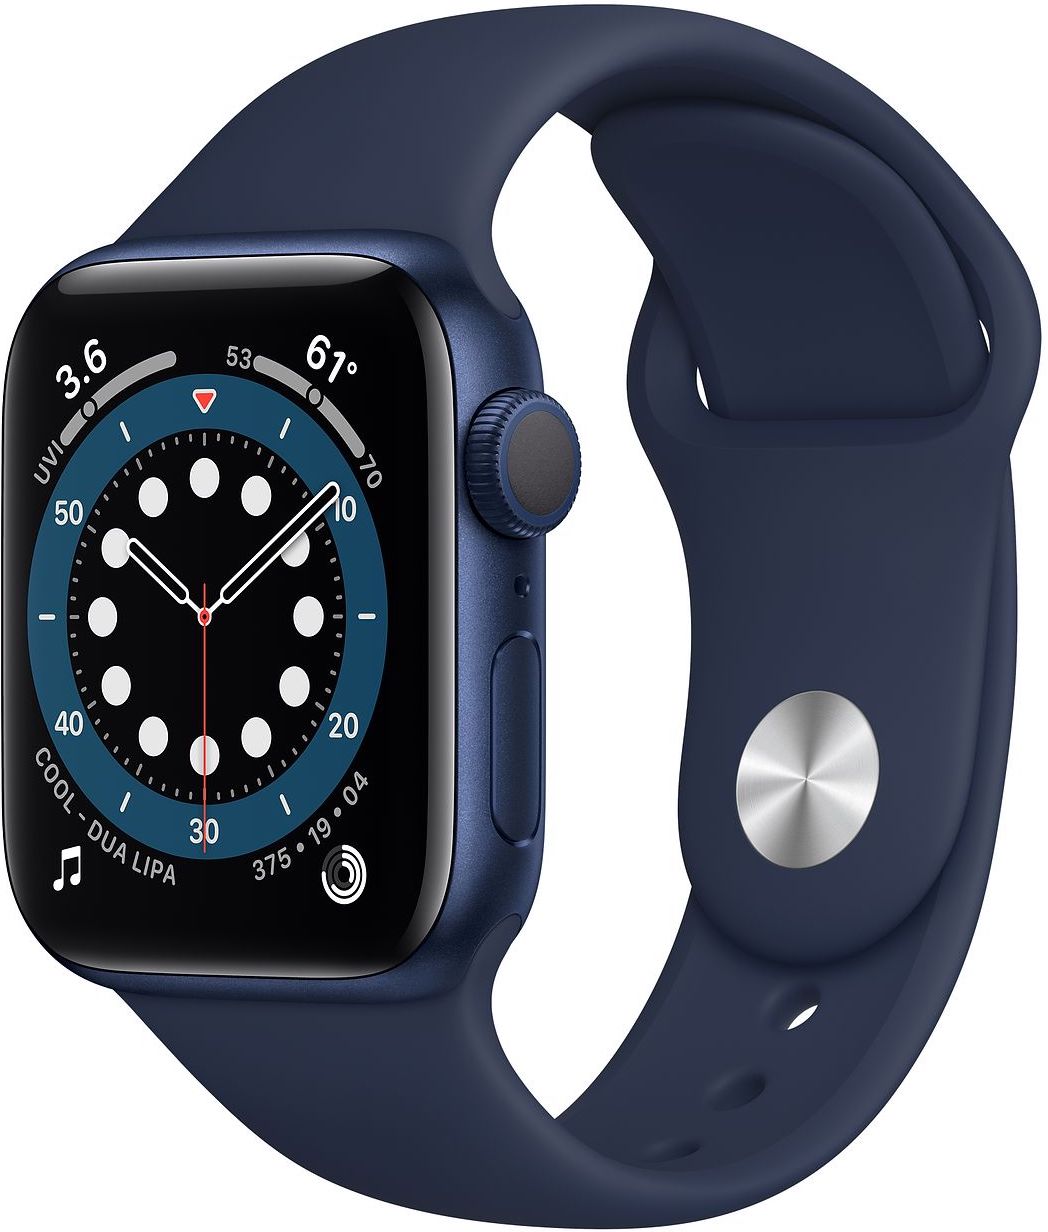 Apple Watch Series 6 Blue Aluminum